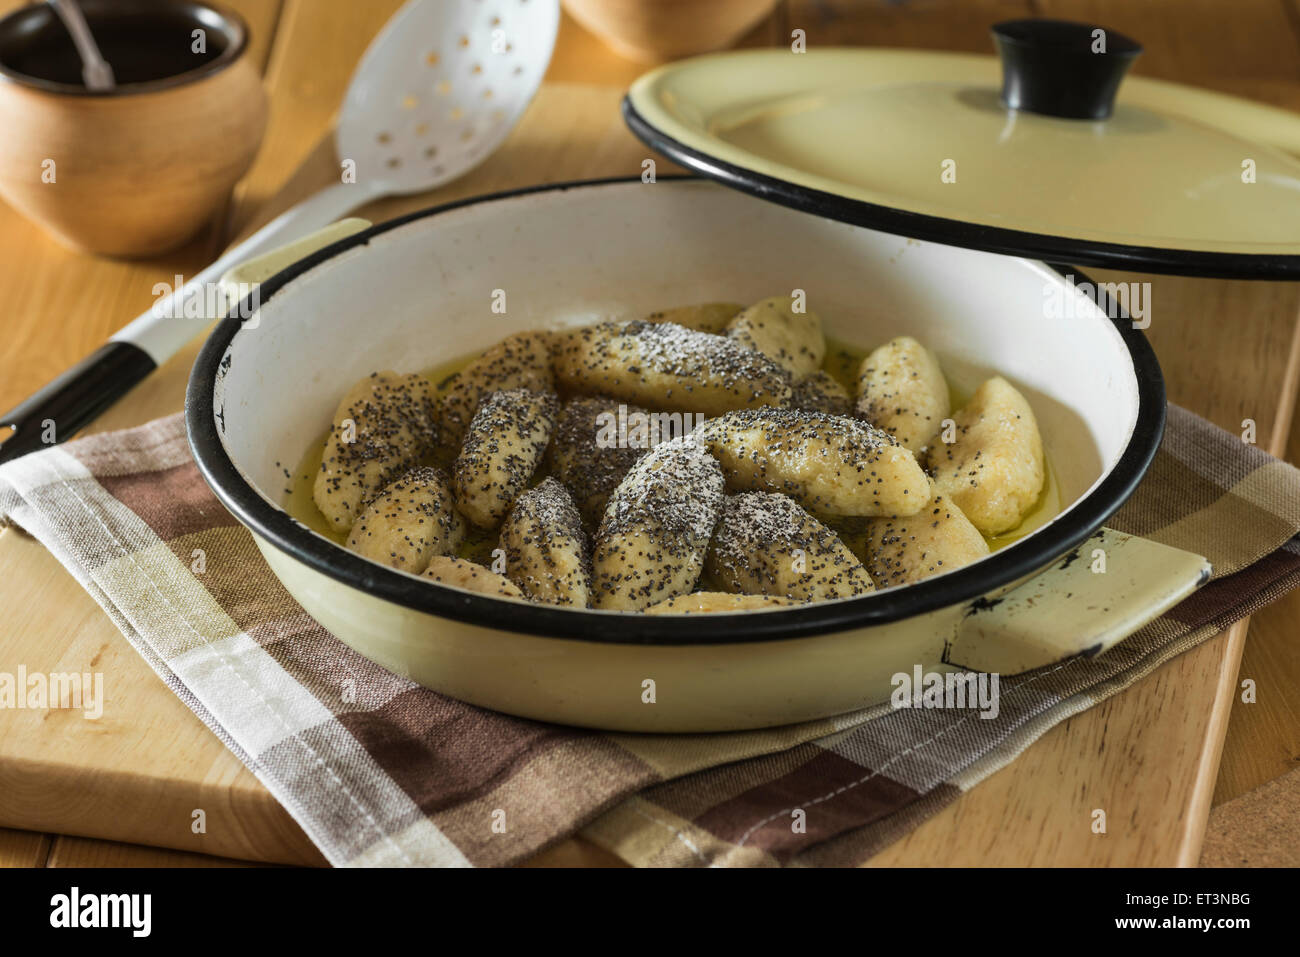 Skubánky. Potato dumplings with poppy seeds. Central Europe Food Stock Photo